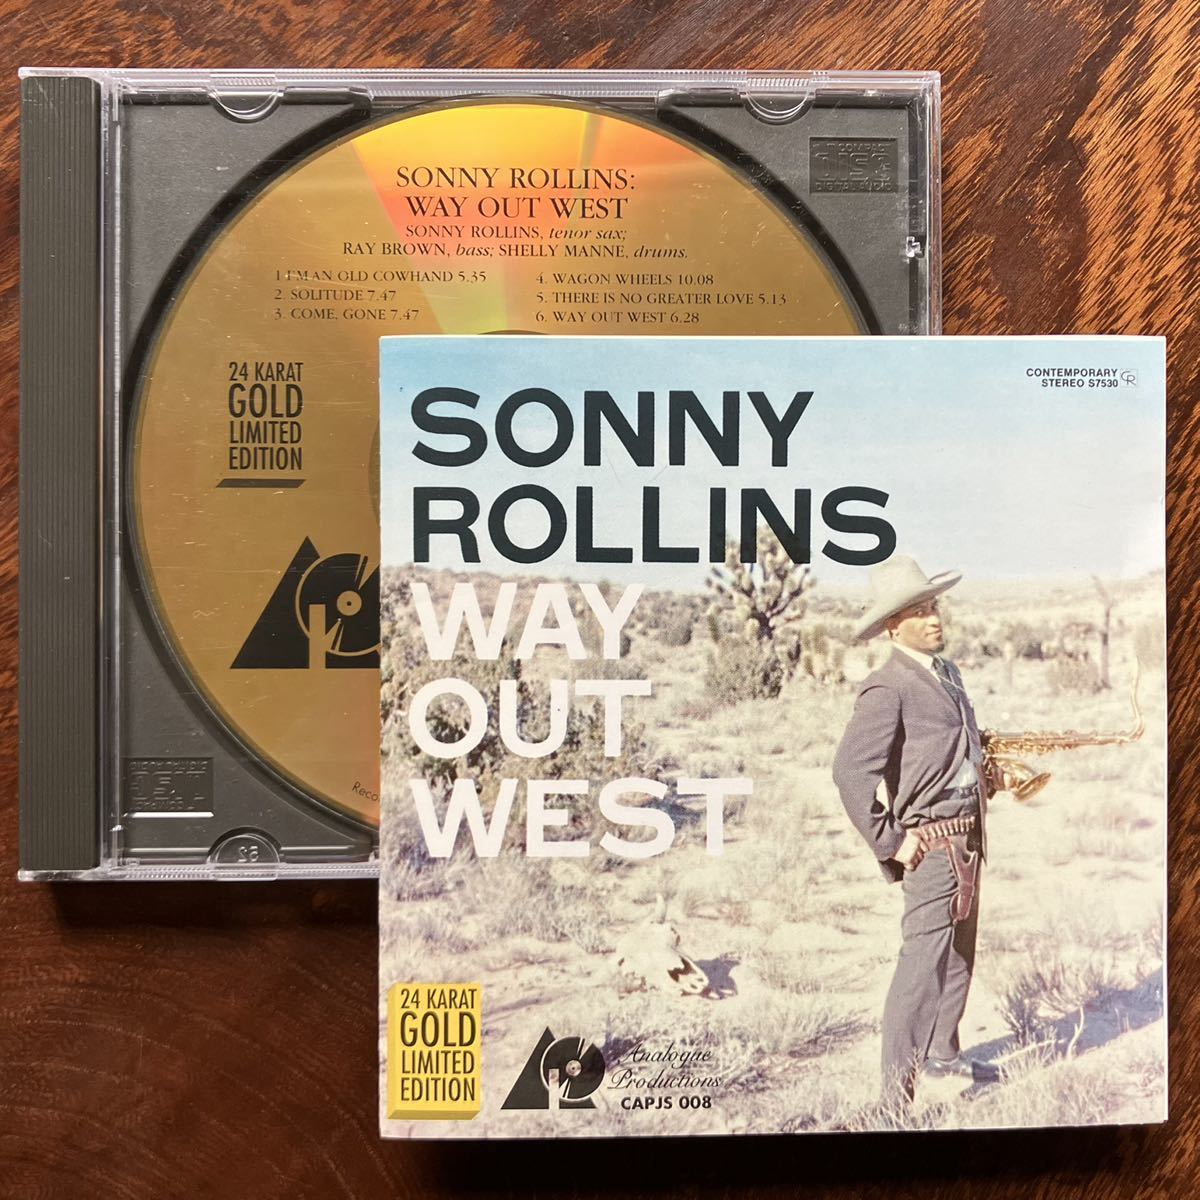 24K GOLD CD】SONNY ROLLINS WAY OUT WEST ソニー・ロリンズ ウェイ・アウト・ウエスト ANALOGUE  PRODUCTIONS CAPJ 008 ゴールド CD